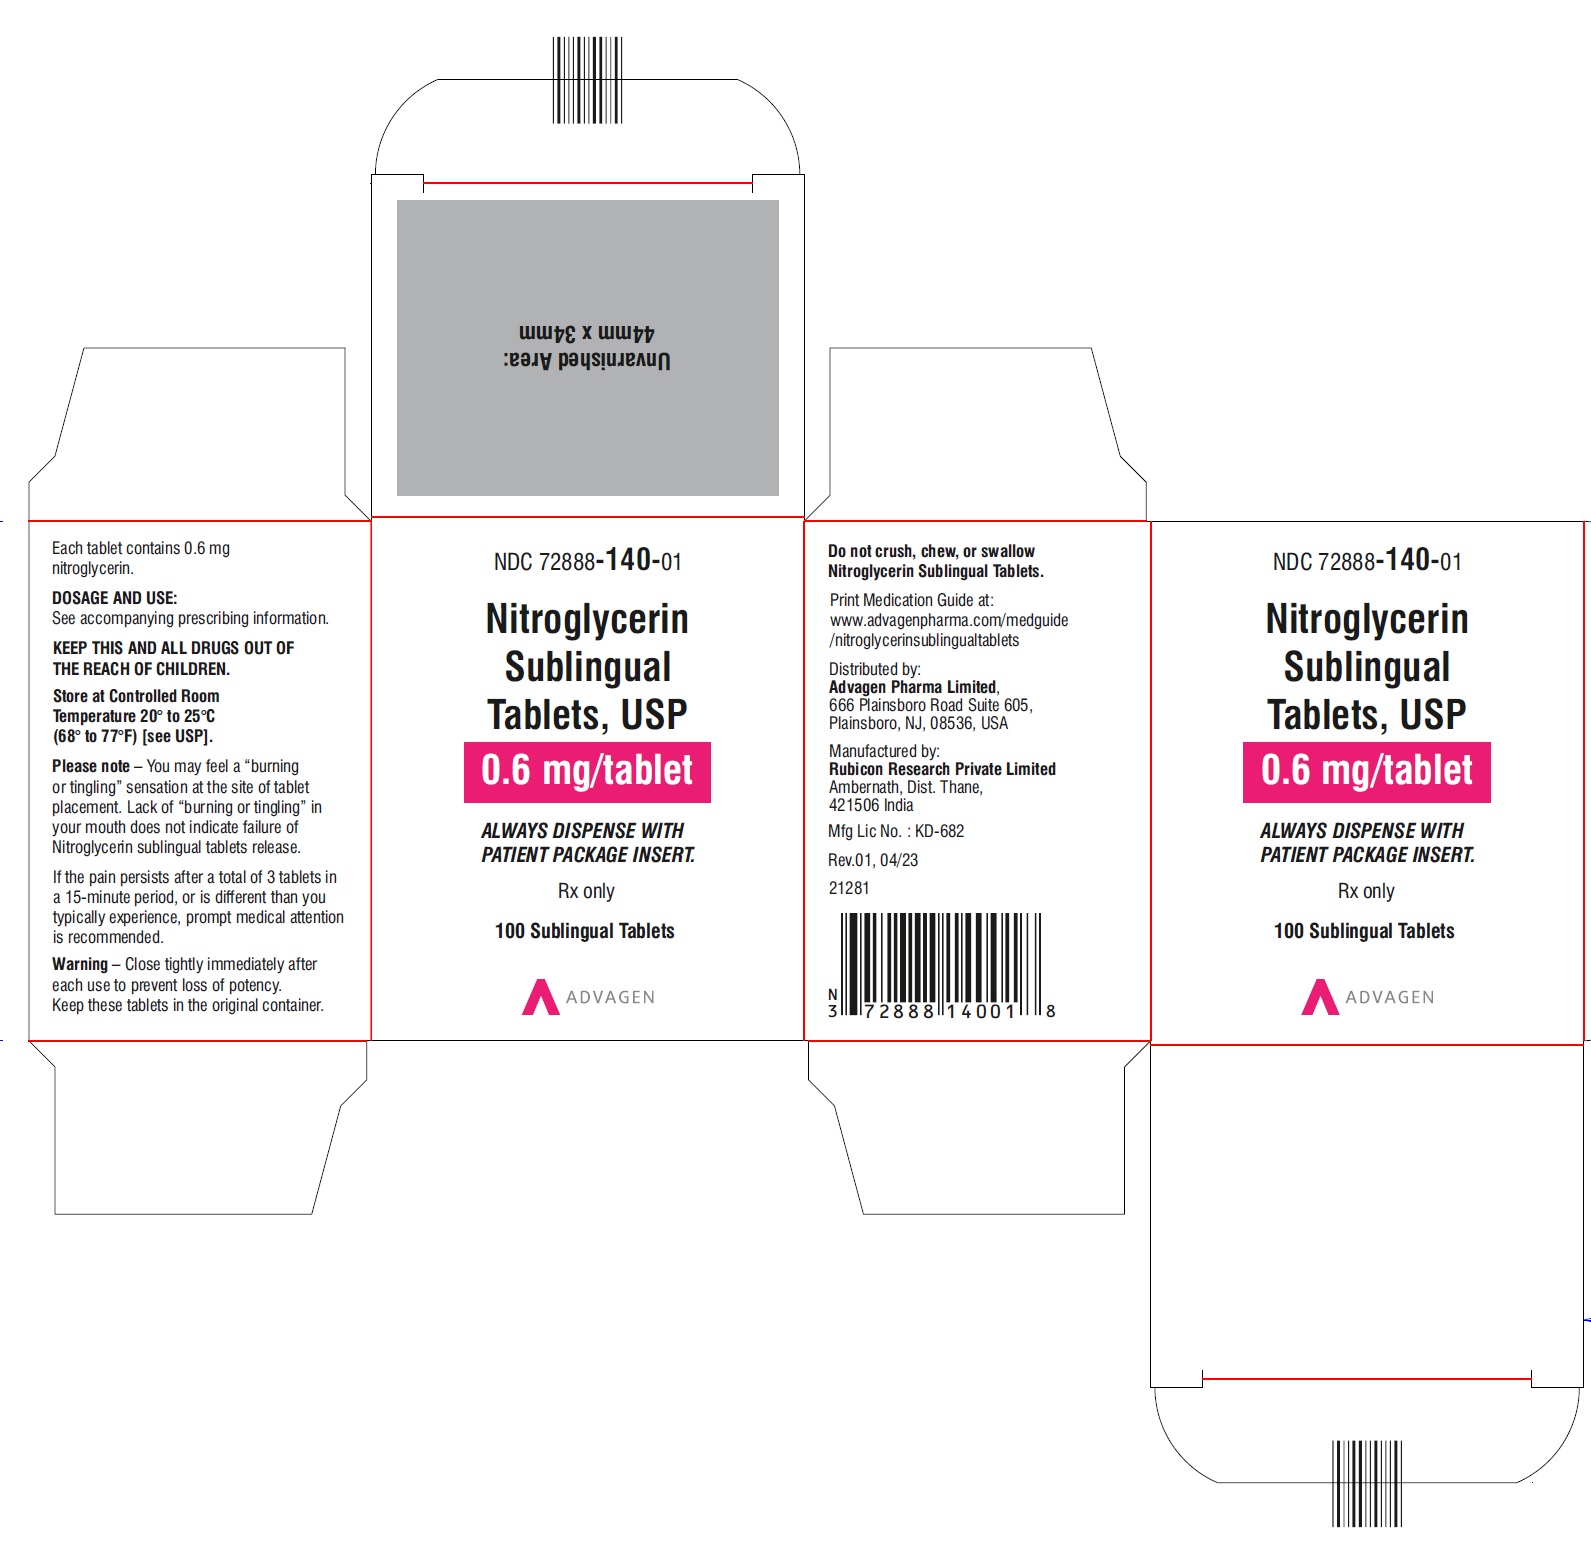 Nitroglycerin Sublingual Tablets, USP 0.6 mg - NDC 72888-140-01  - Carton Label